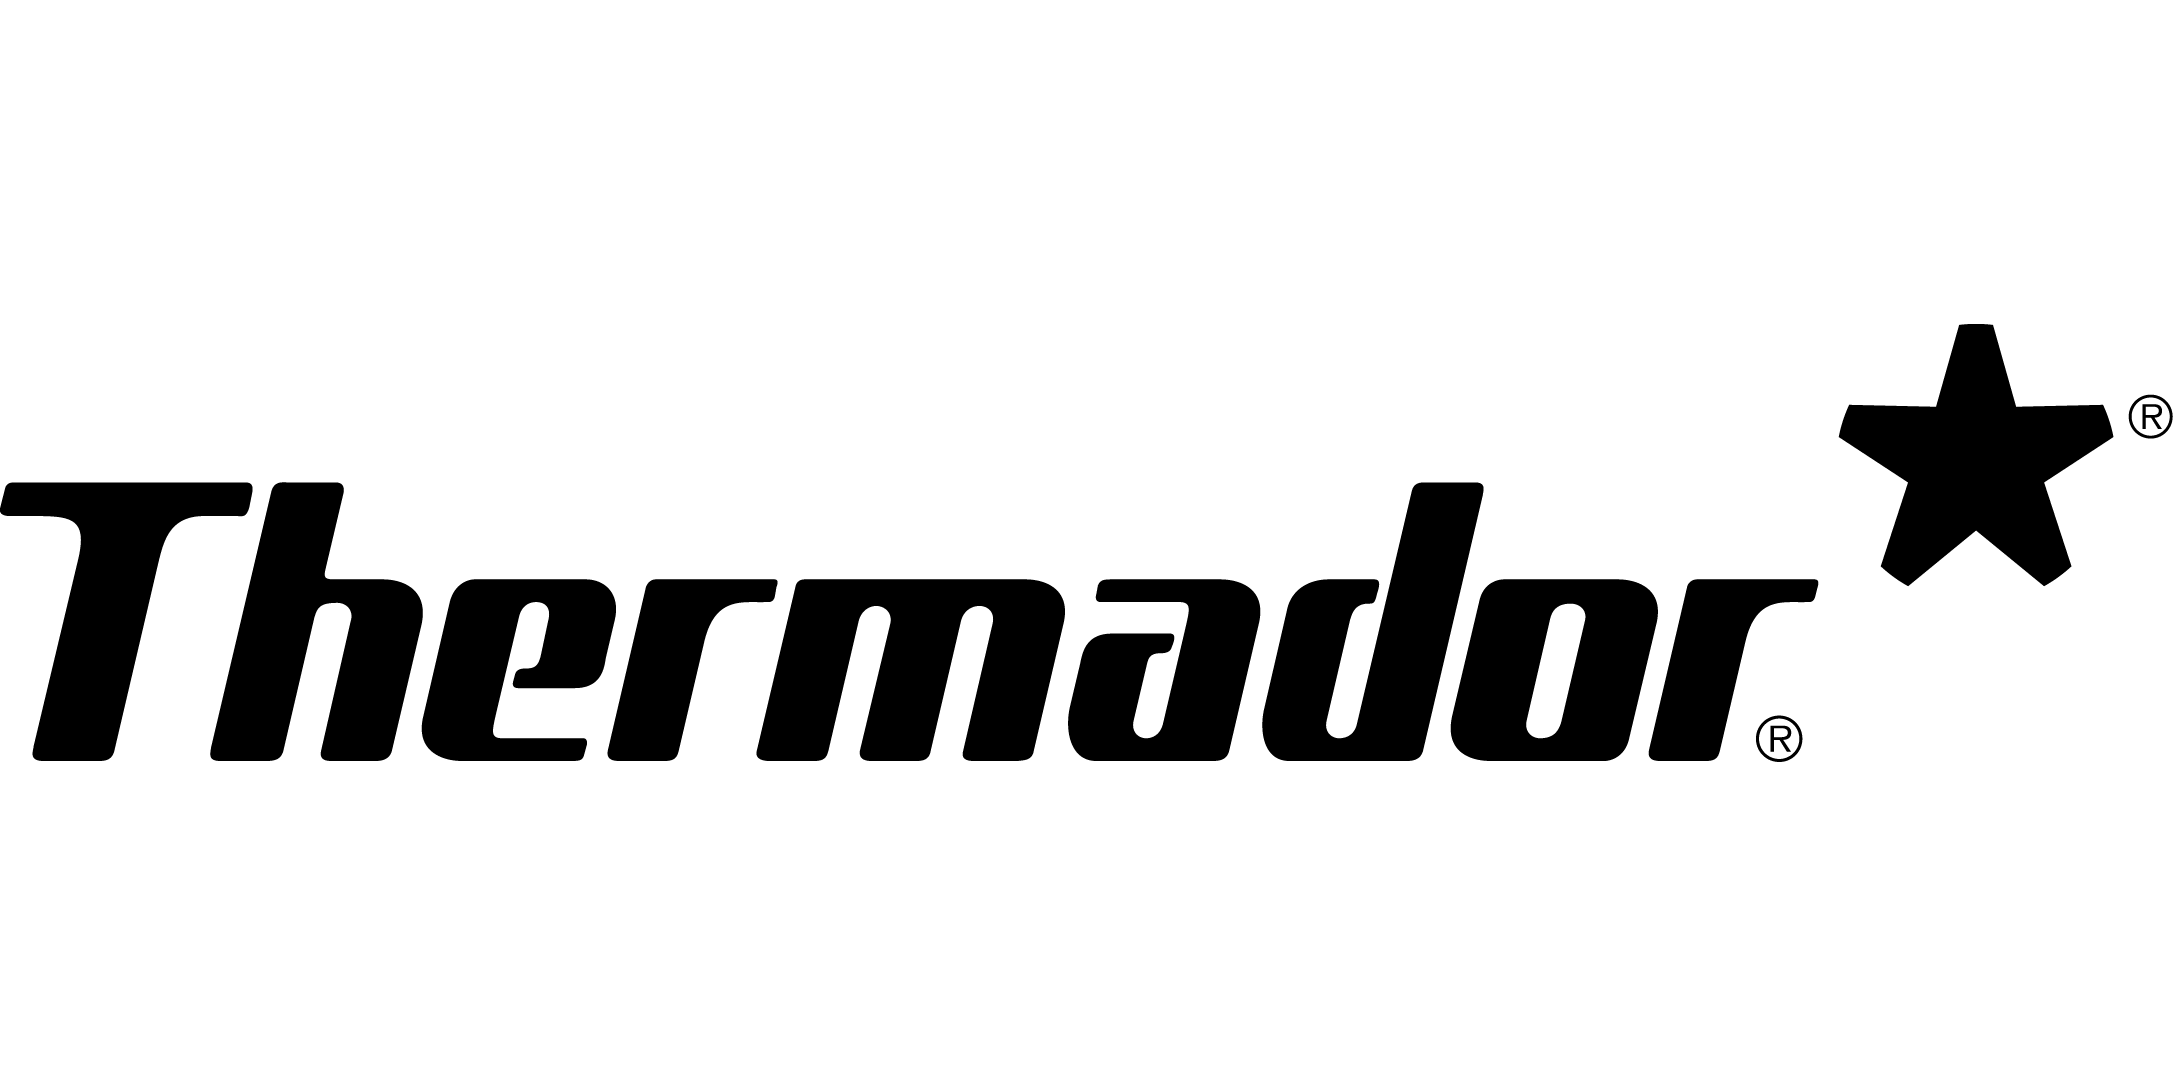 Thermador small logo